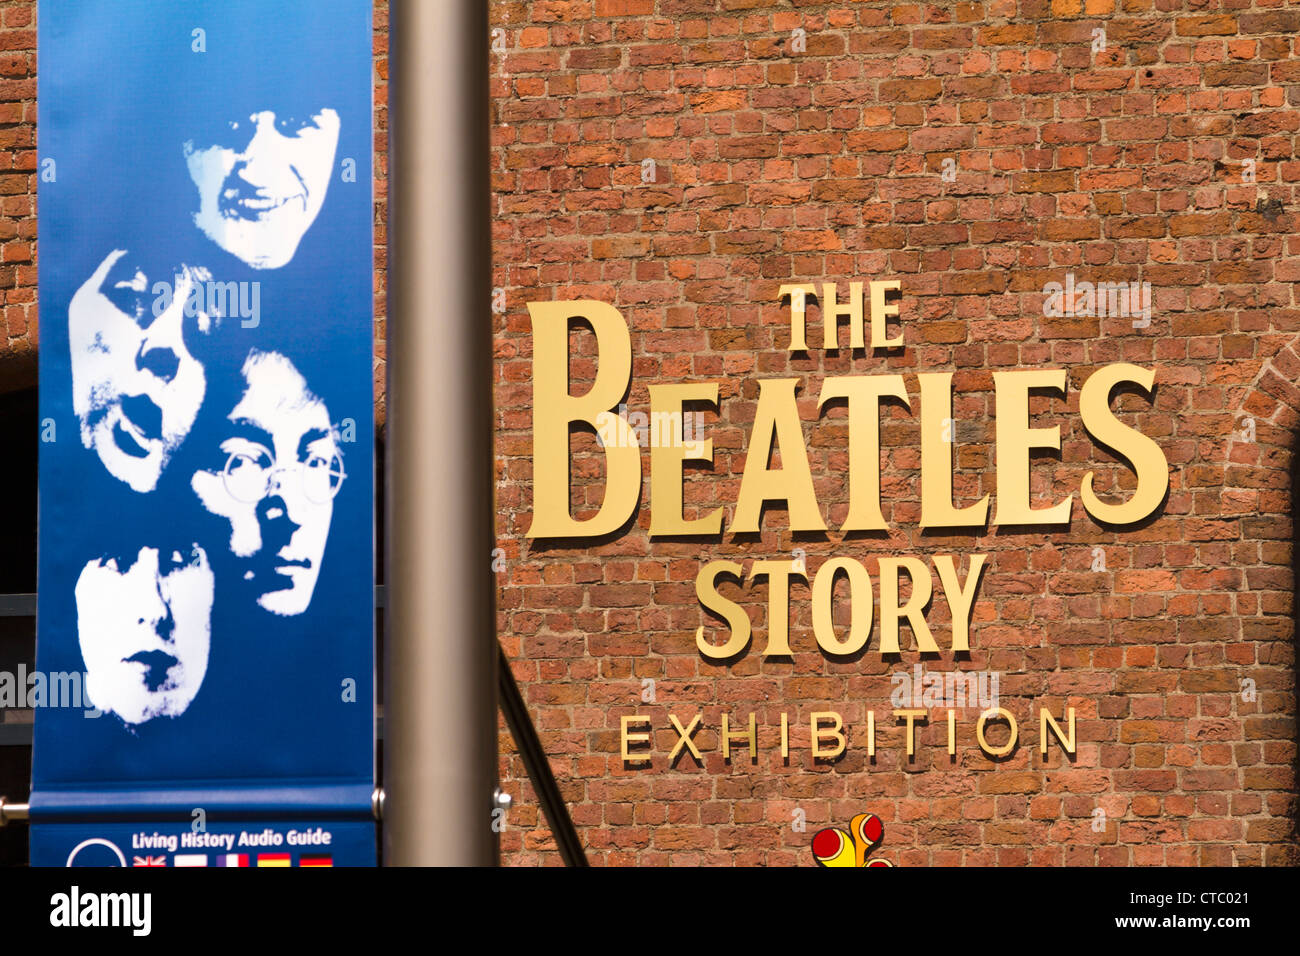 Le Beatles Story, Albert Dock, Liverpool Banque D'Images